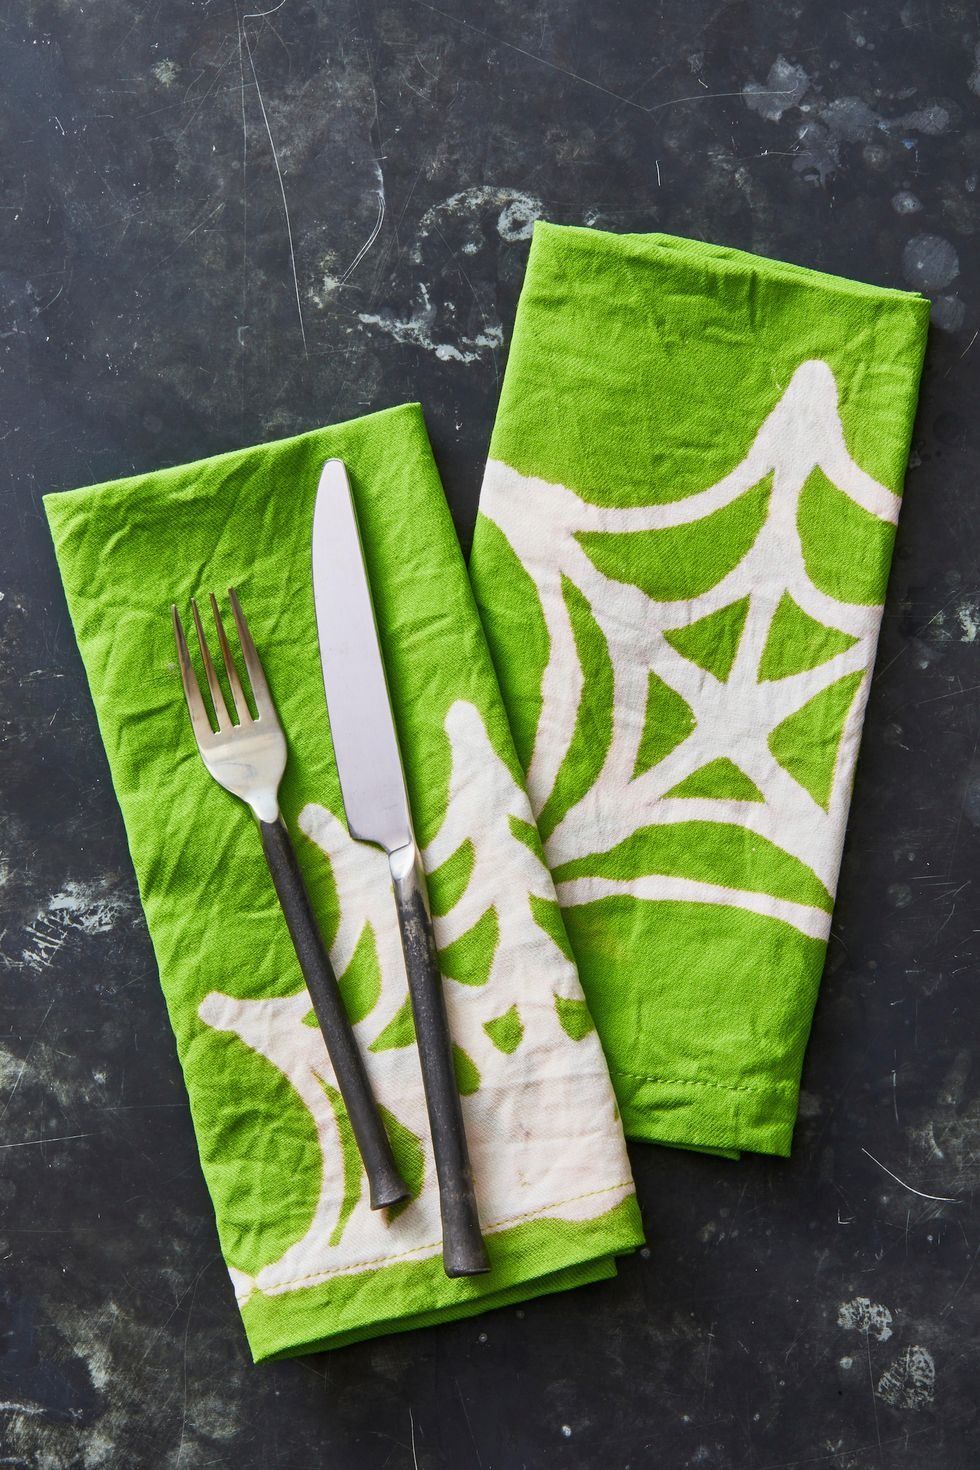 halloween crafts, two green bleach pen napkins with white spiderweb designs